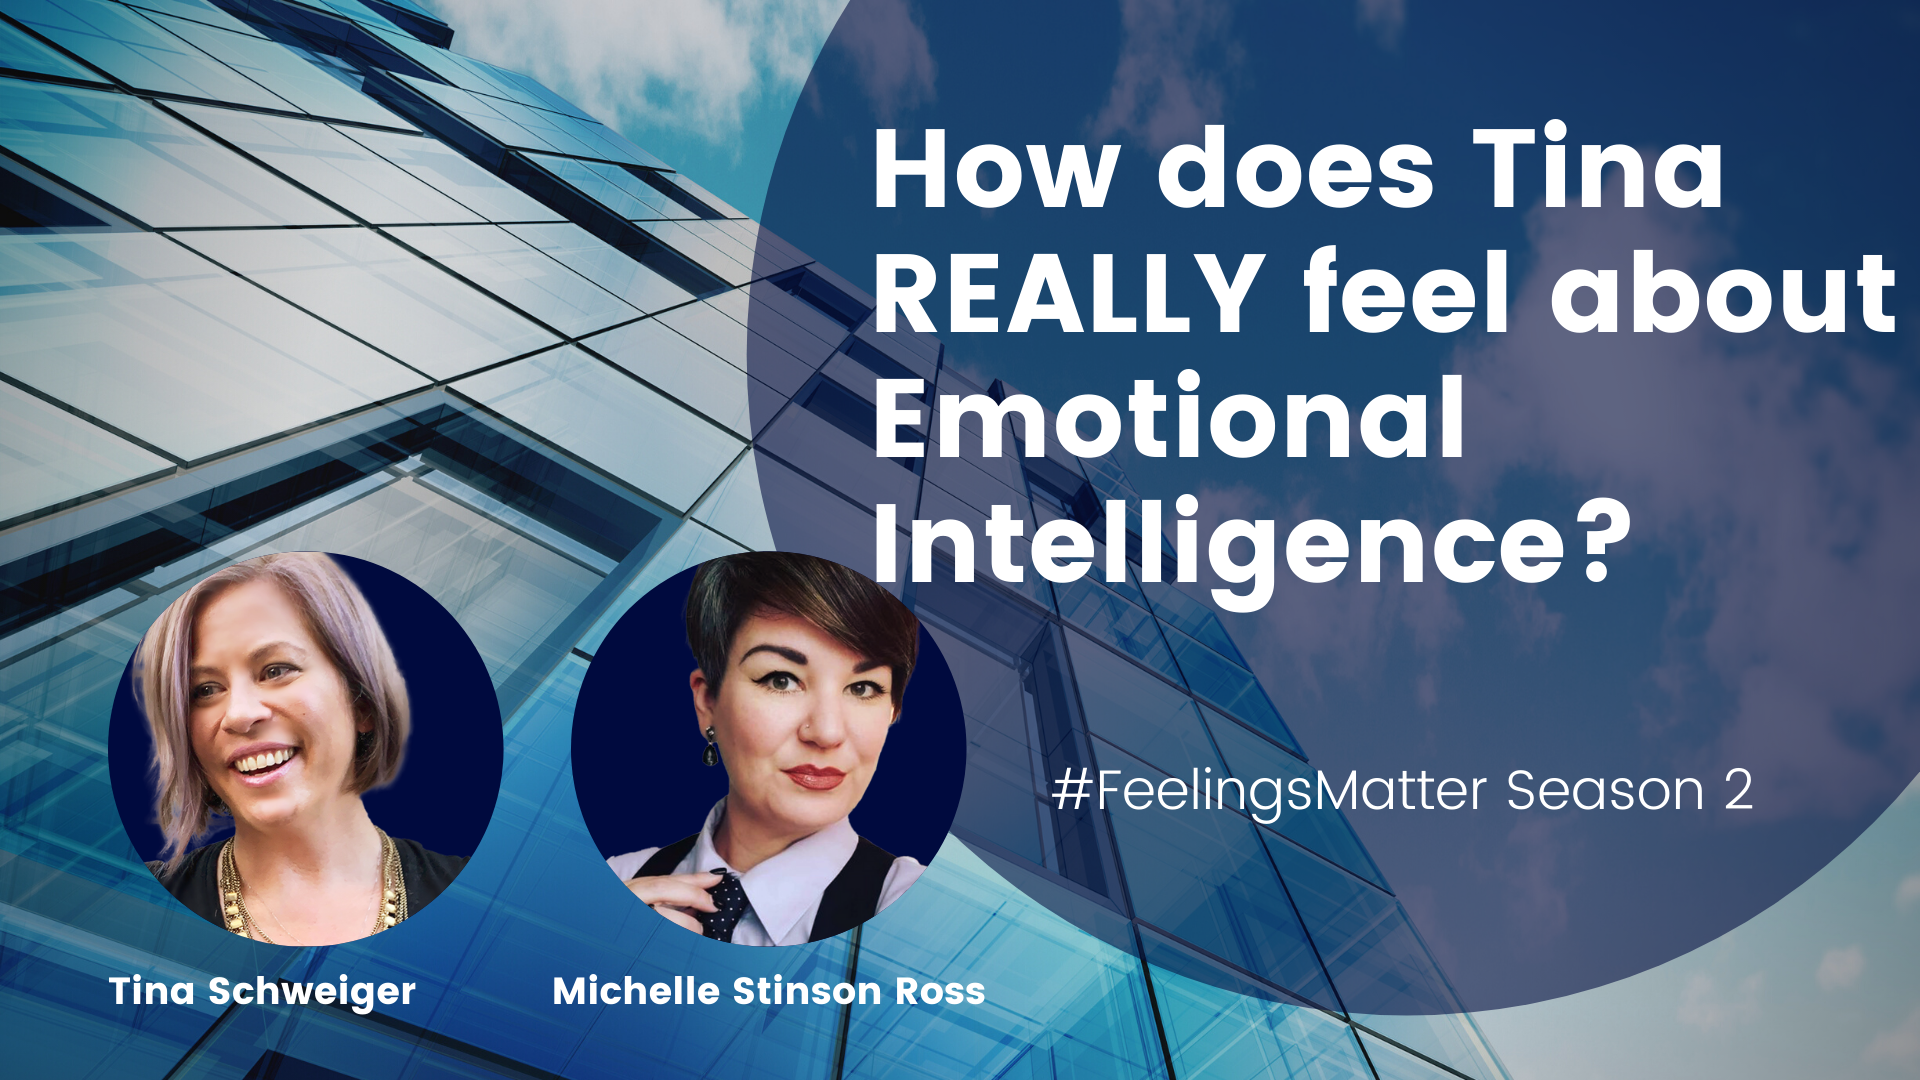 Emotional Intelligence: a Vital Skill Set